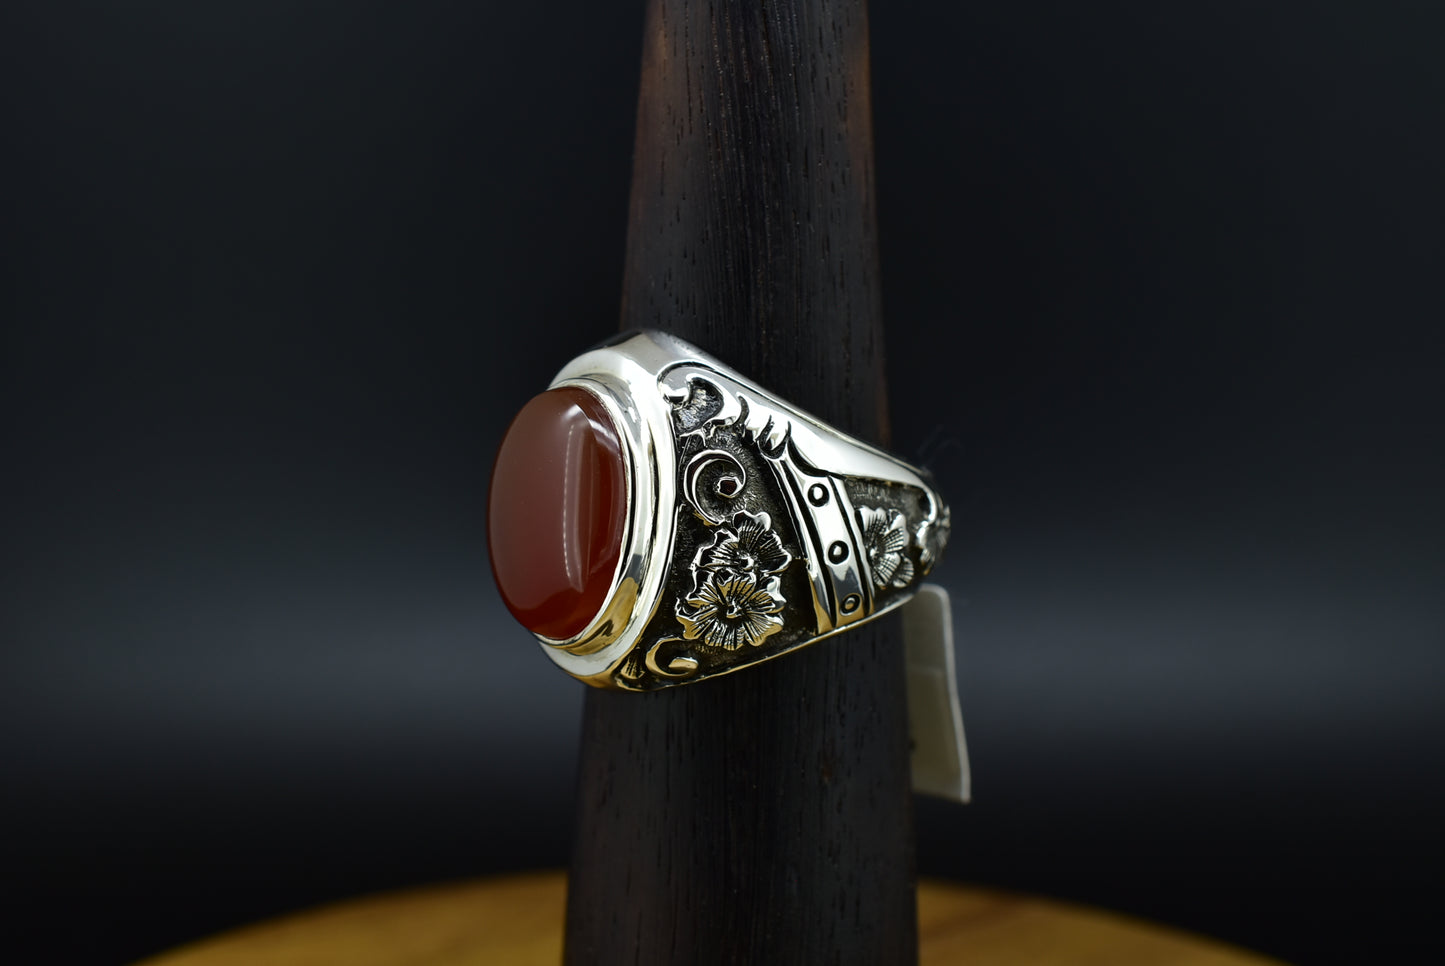 Yemen agate silver ring